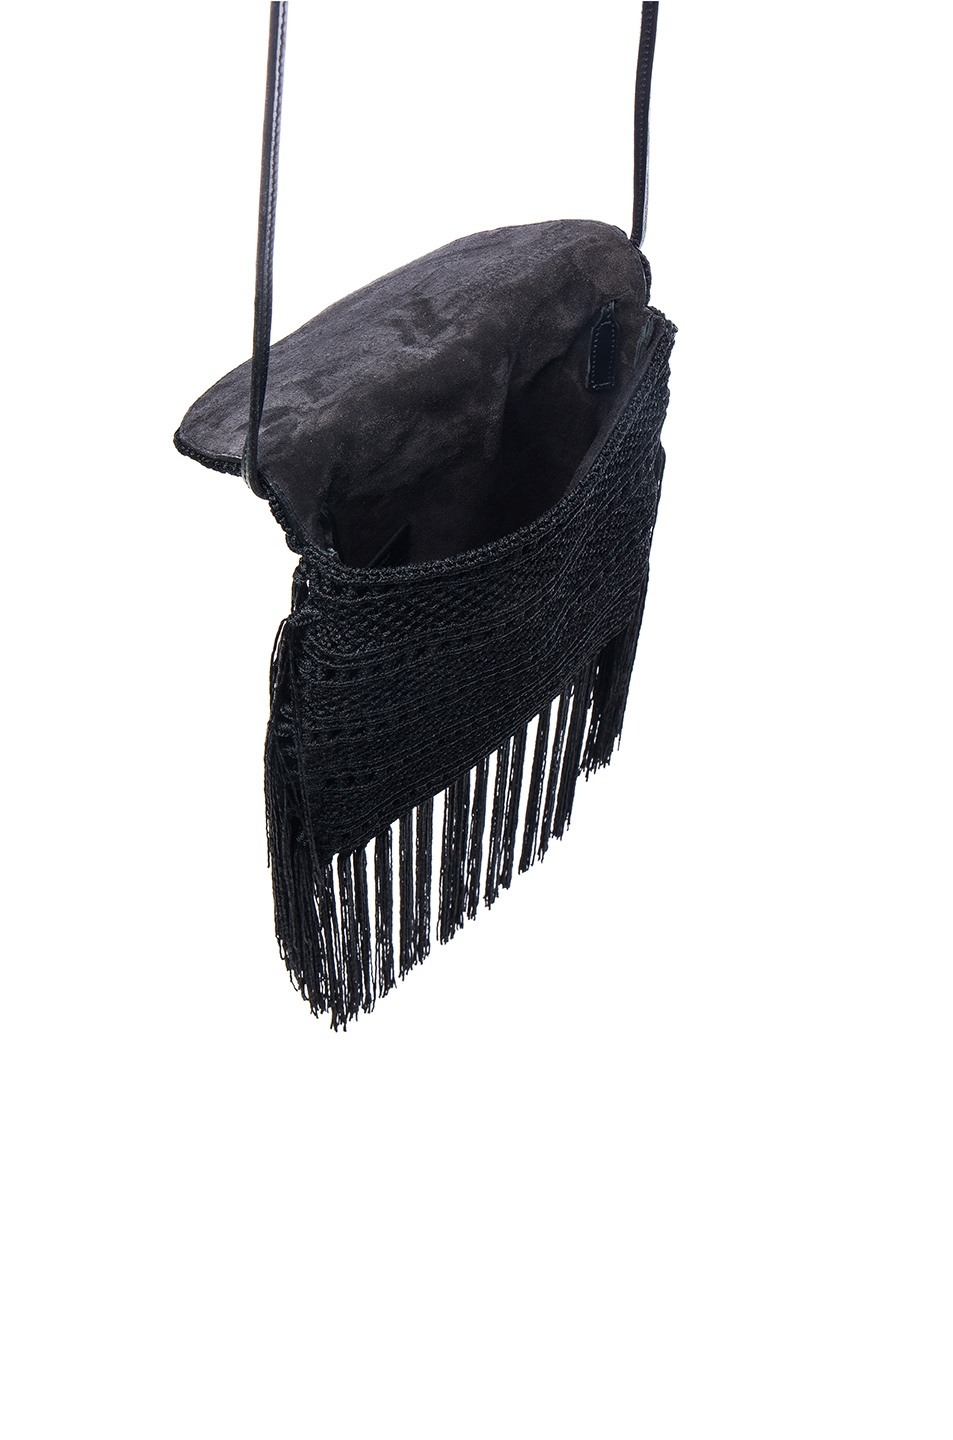 yves saint laurent bags online - Saint laurent Anita Crochet Crossbody Bag in Black | Lyst